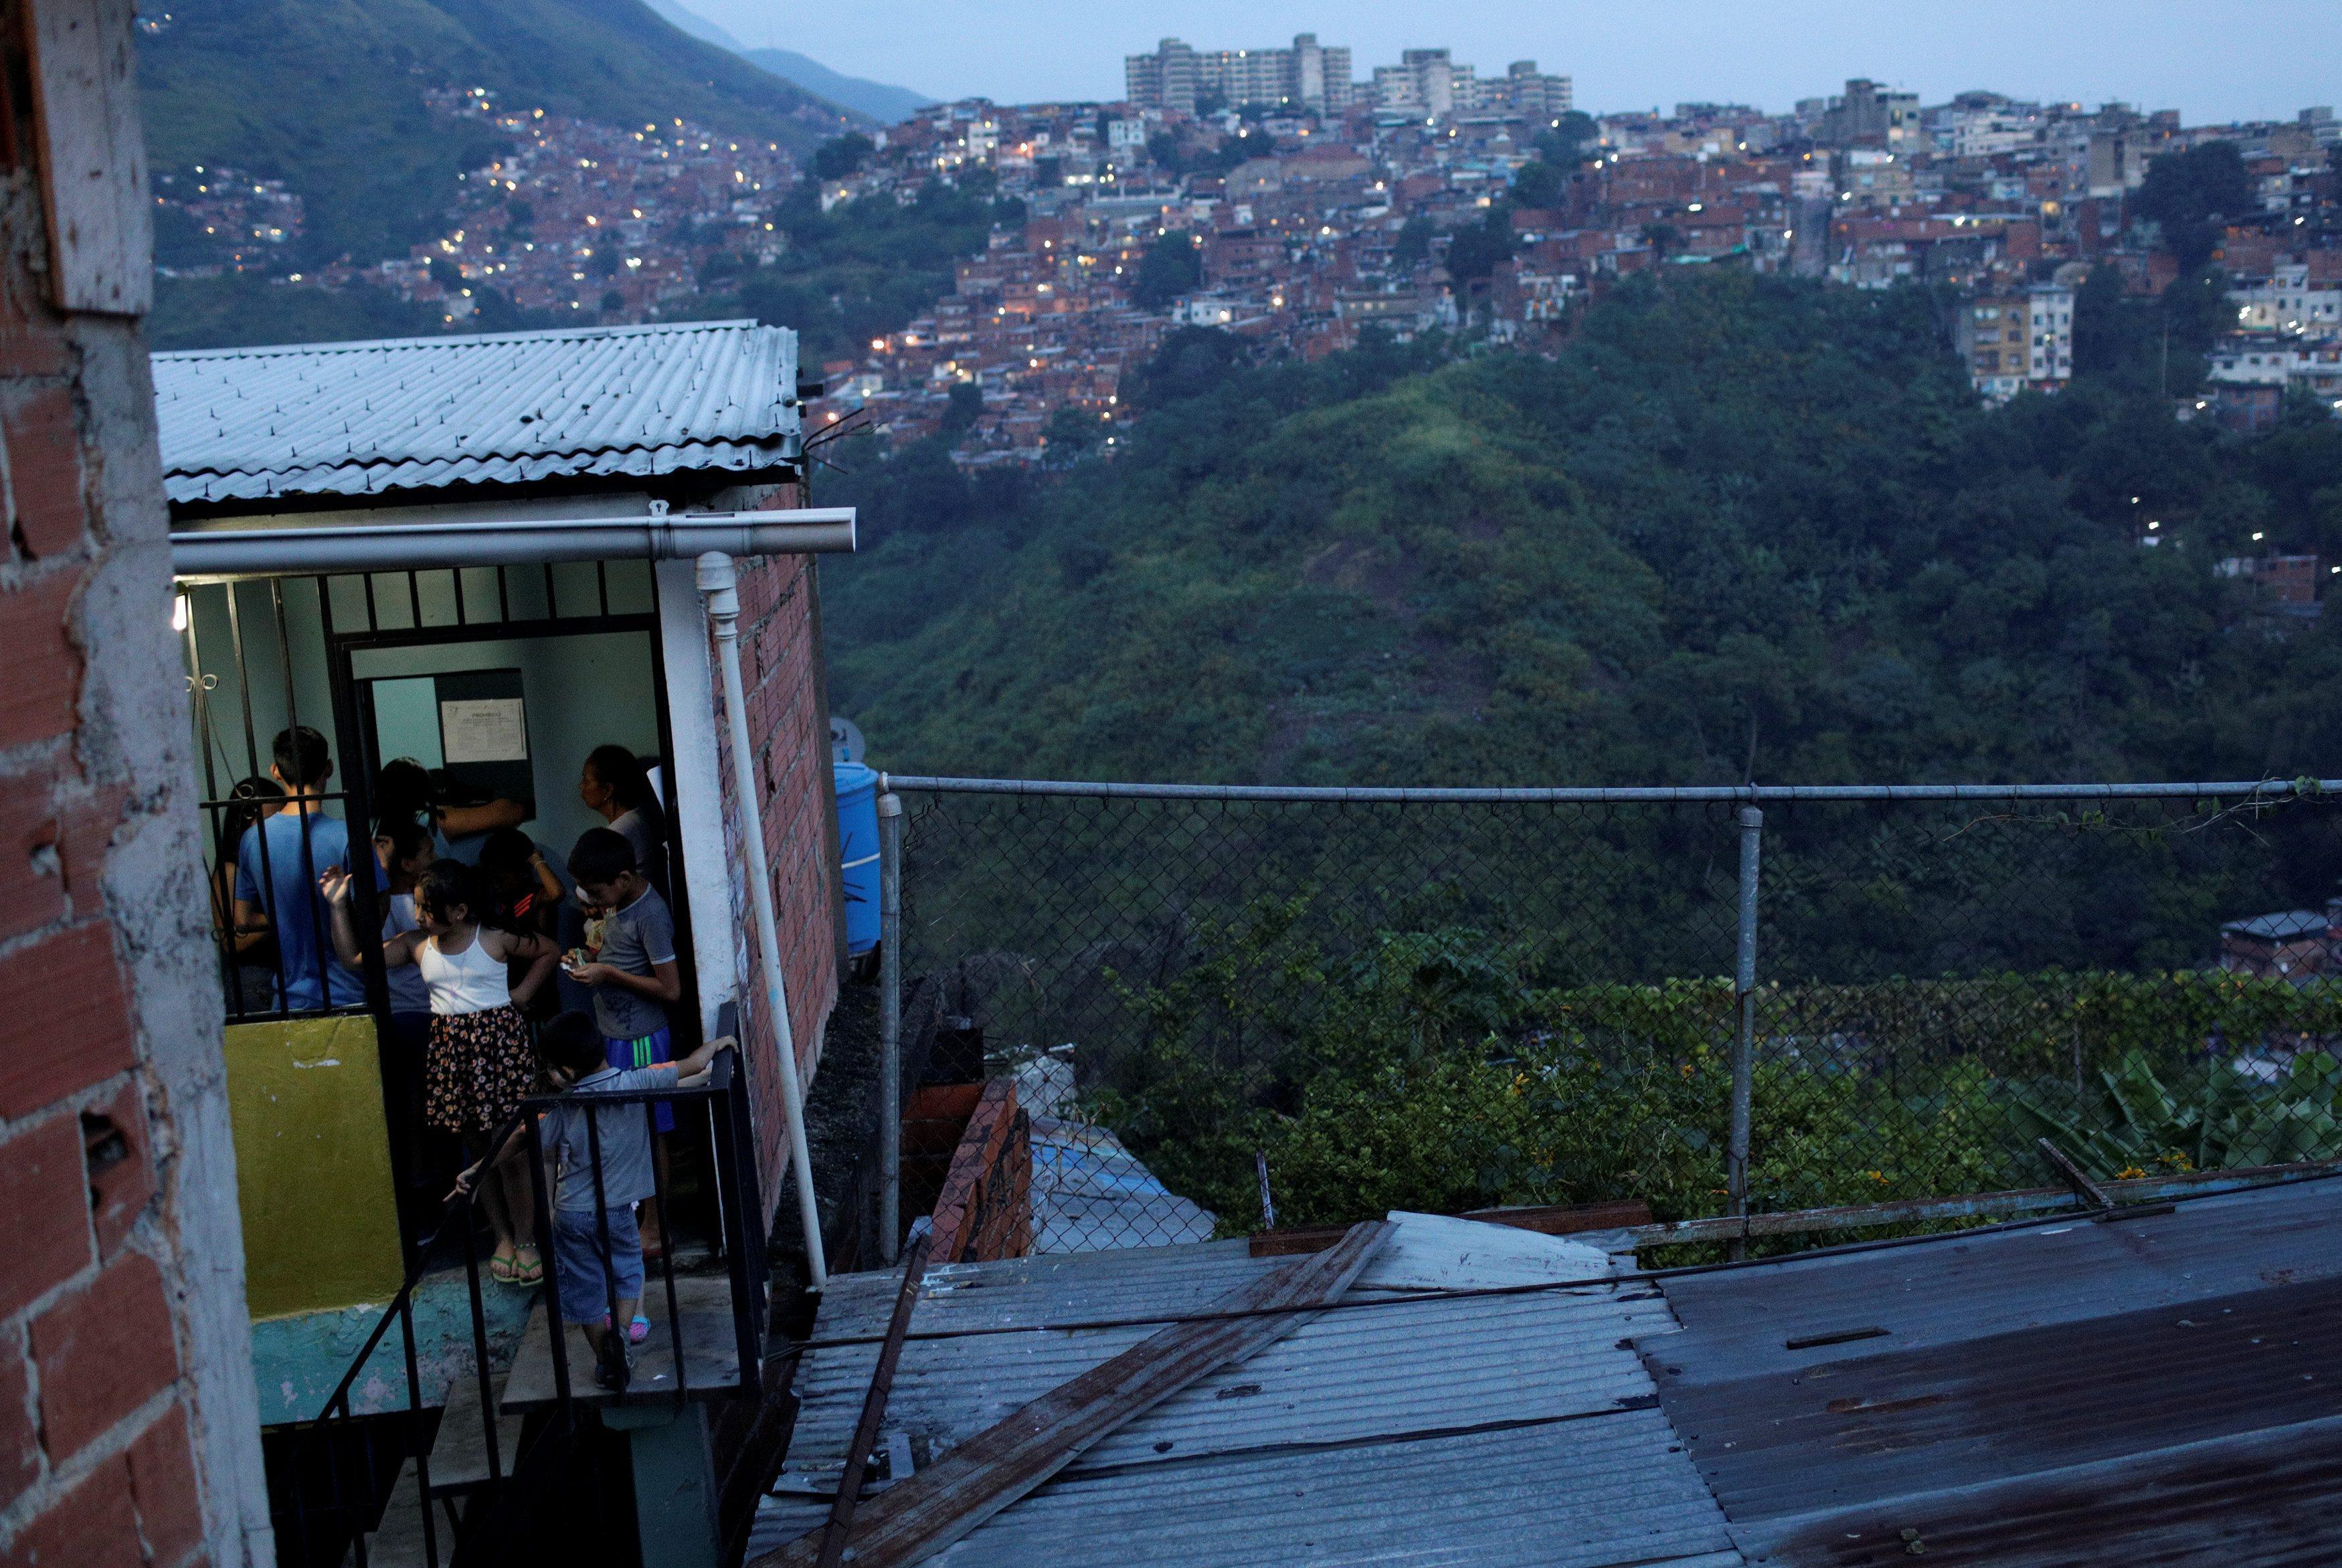 The Wider Image: Venezuelan crisis spawns boom in gambling